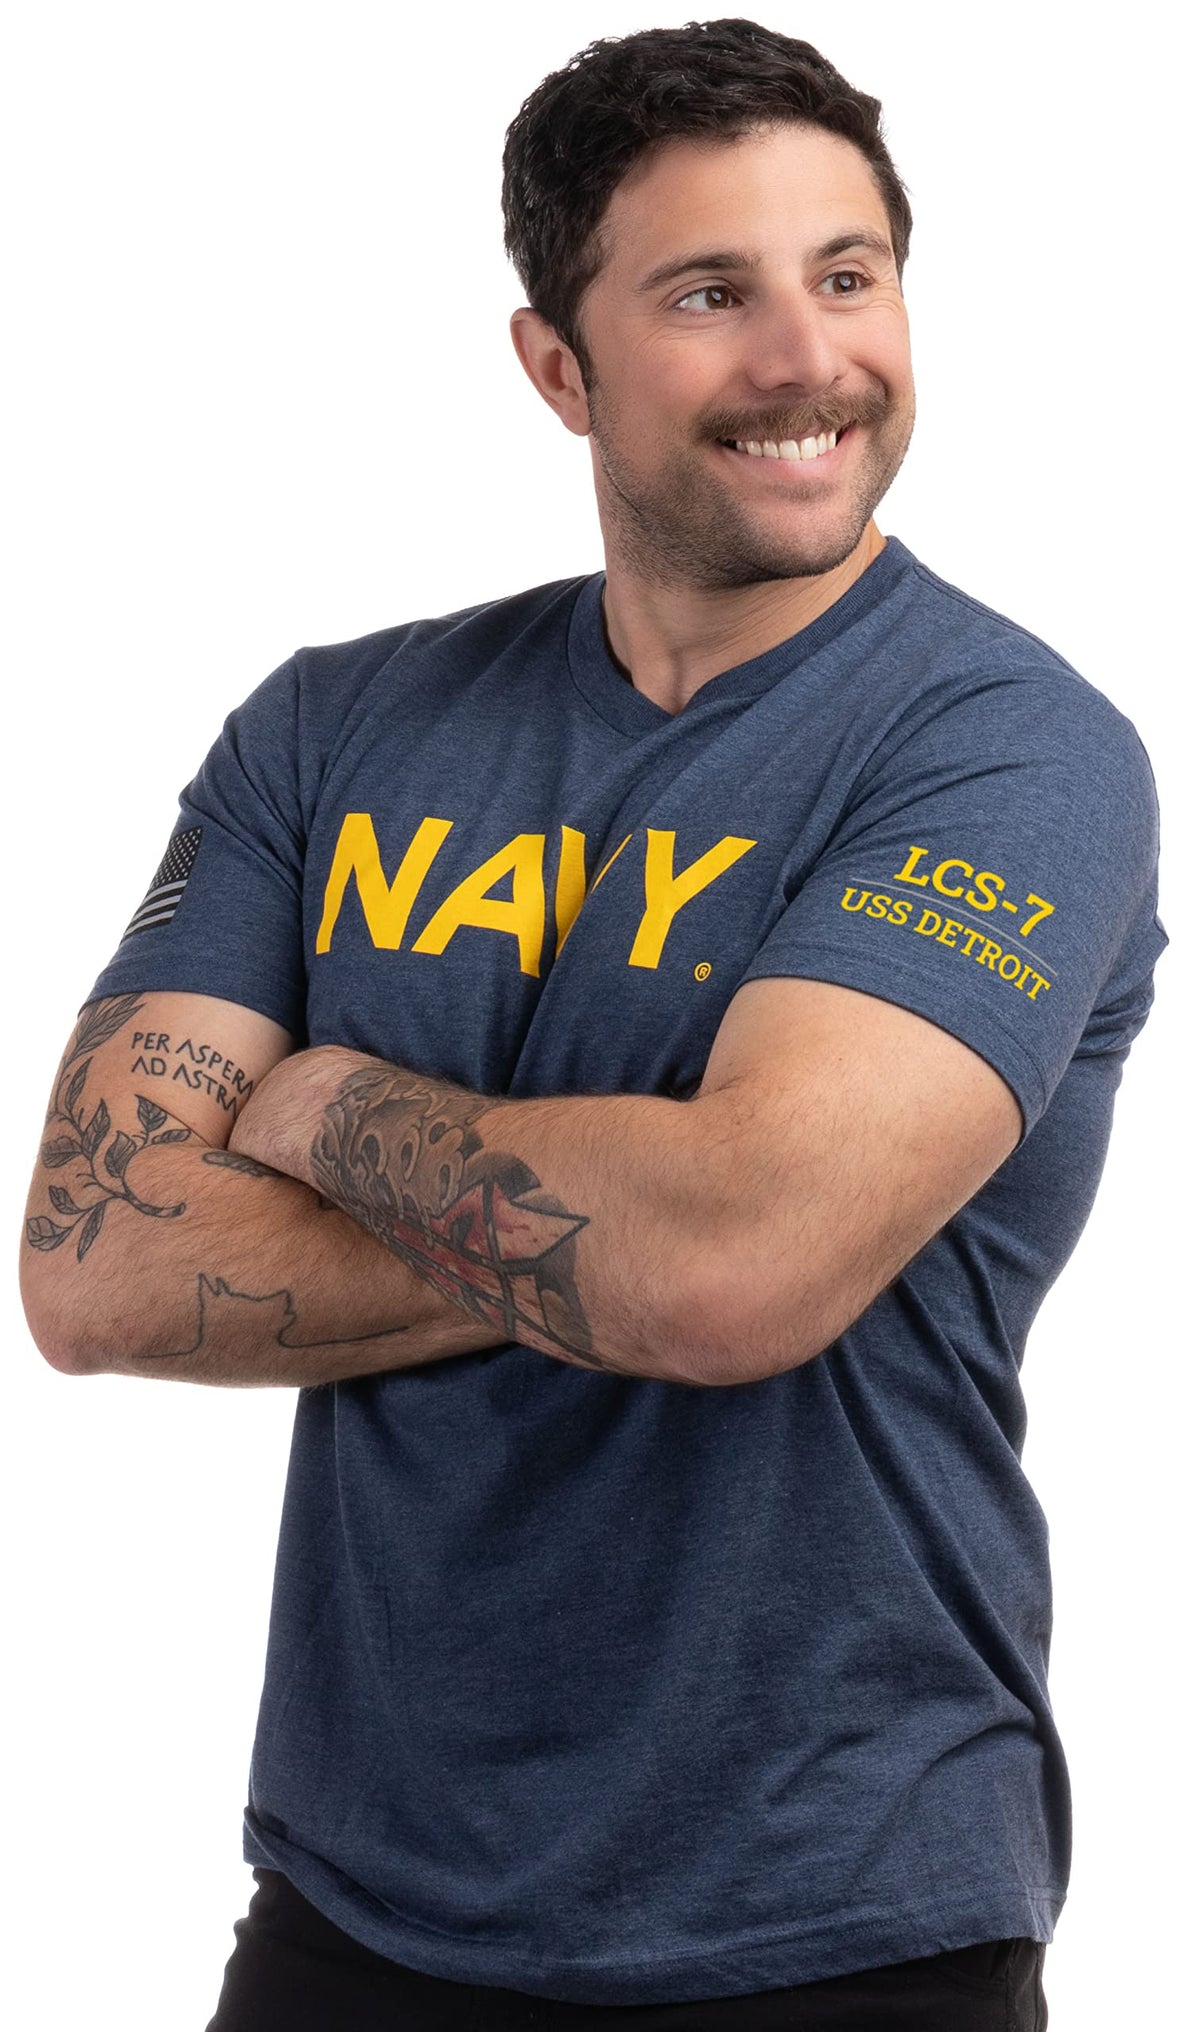 USS Detroit, LCS-7 | U.S. Navy Sailor Veteran USN United States Naval T-shirt for Men Women